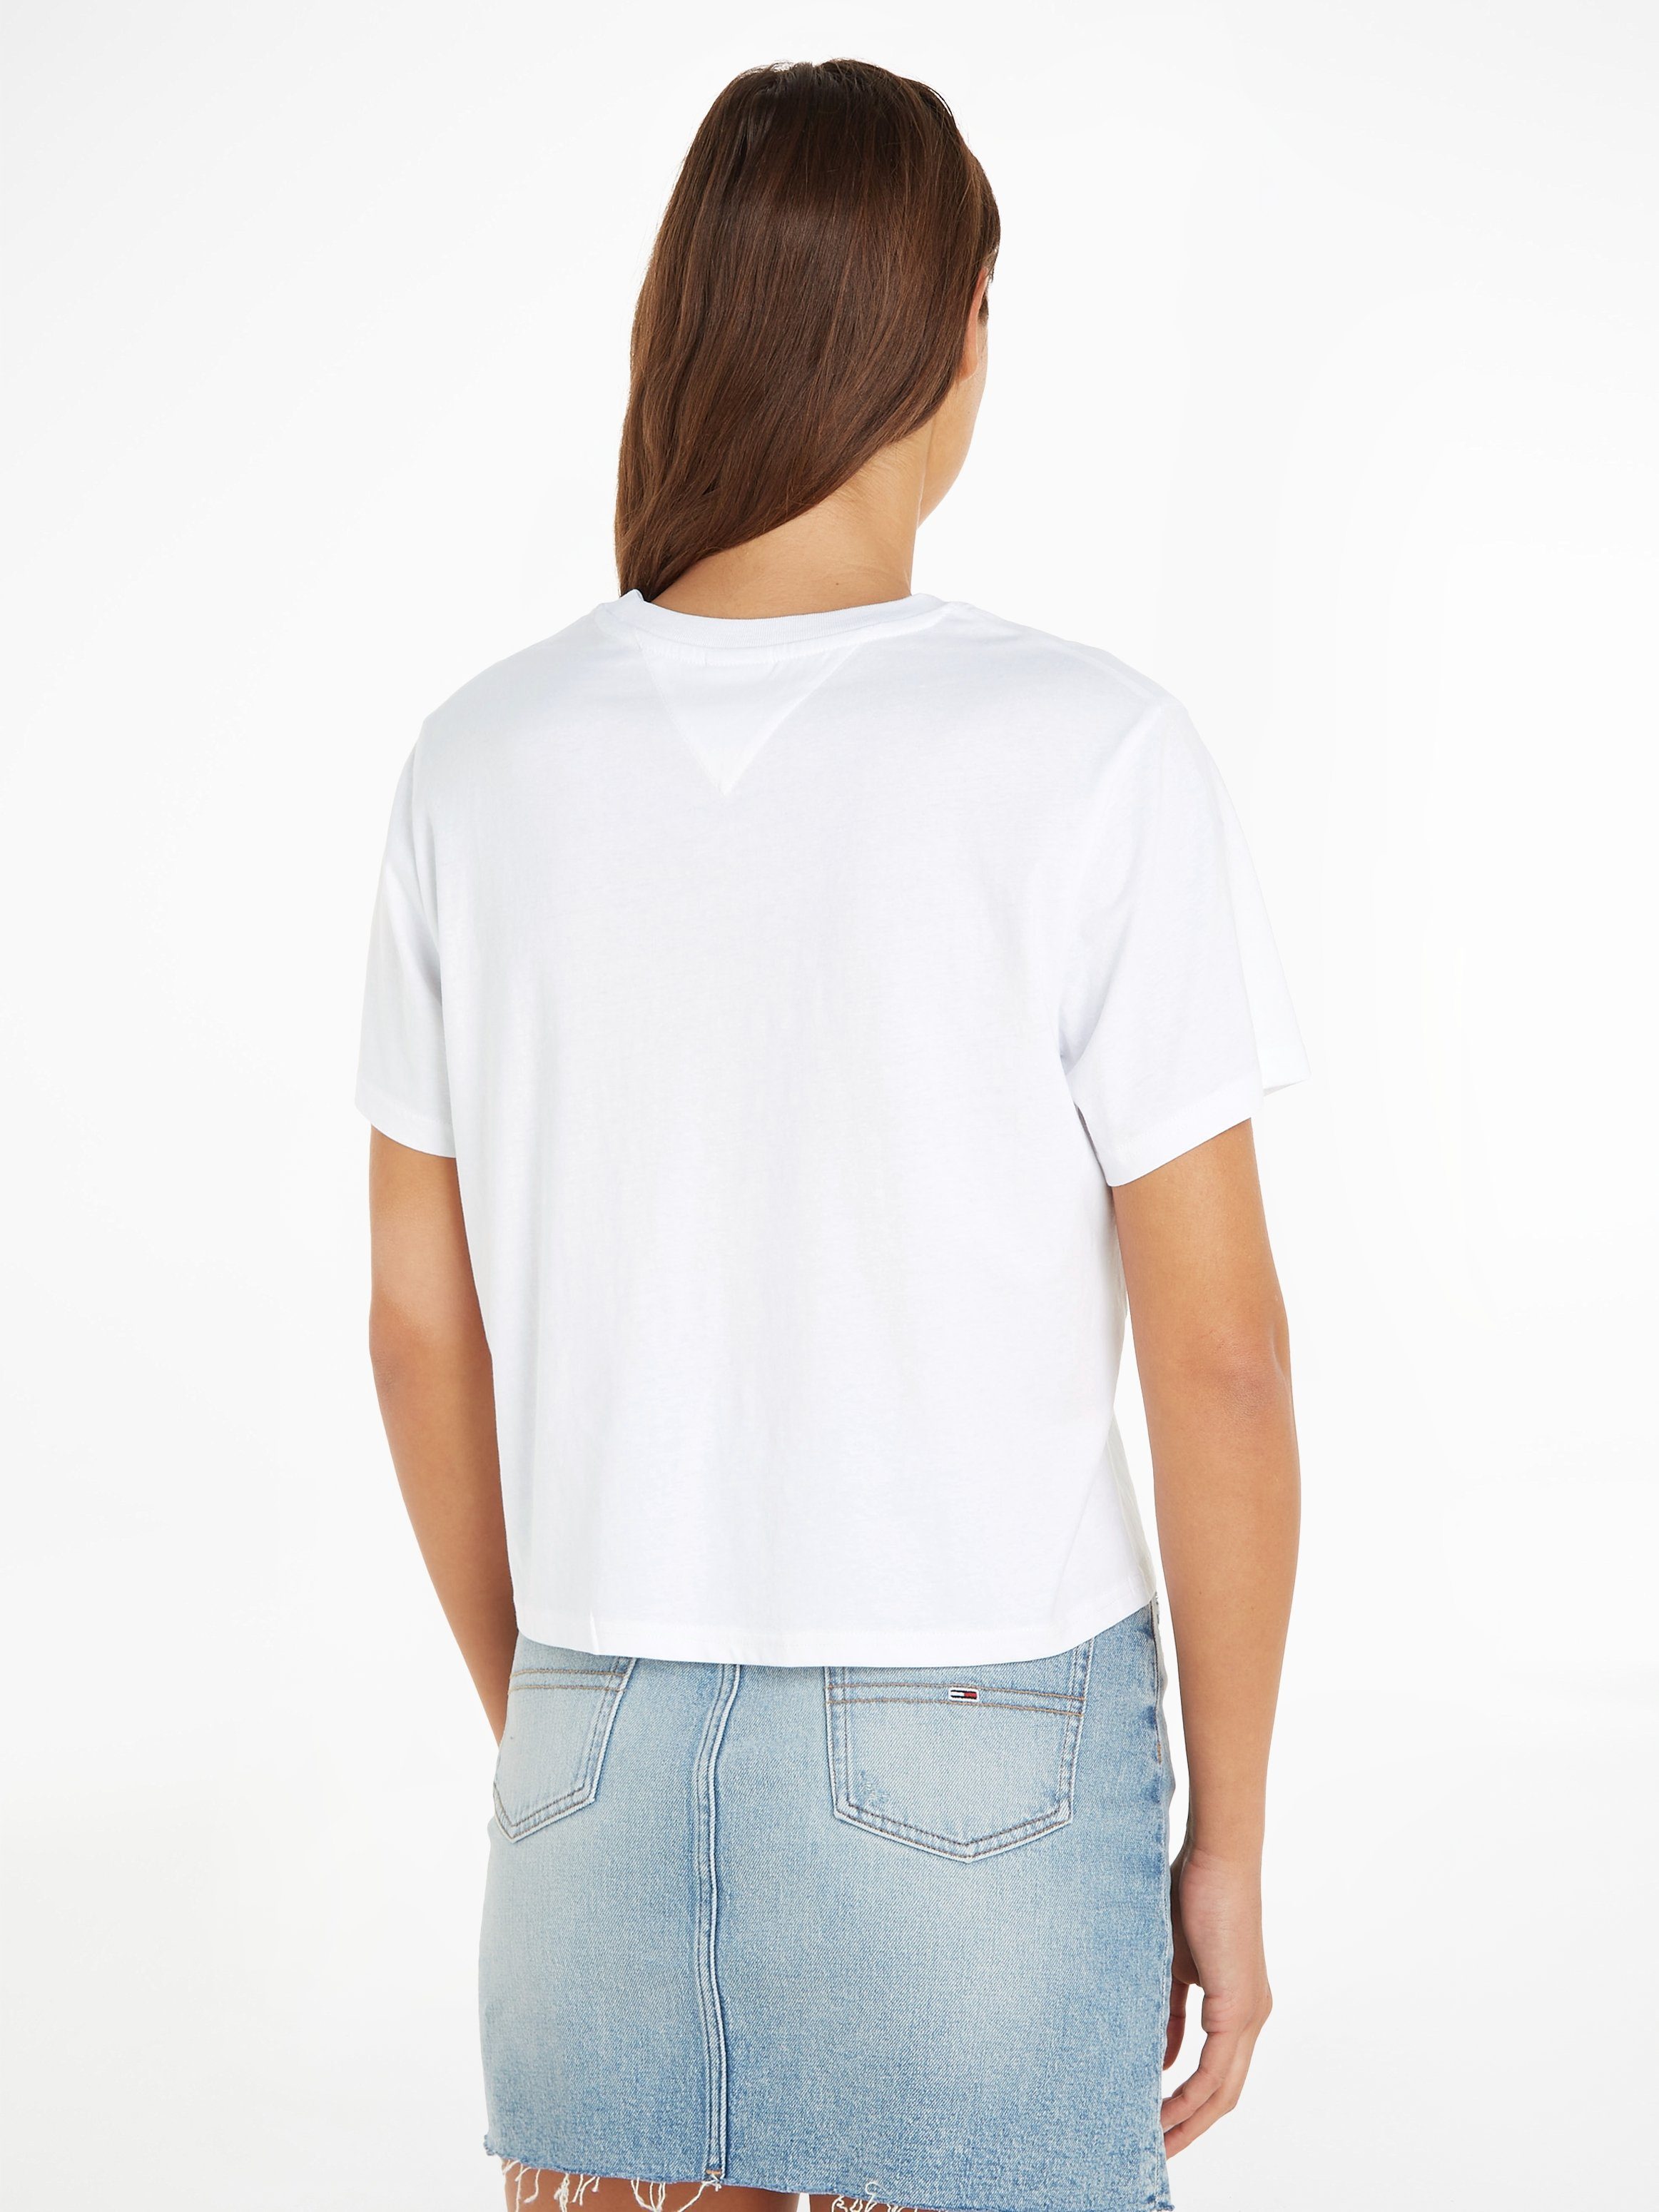 ATH TJ Tommy TJW Logodruck CLS Jeans TEE sommerlichem T-Shirt mit